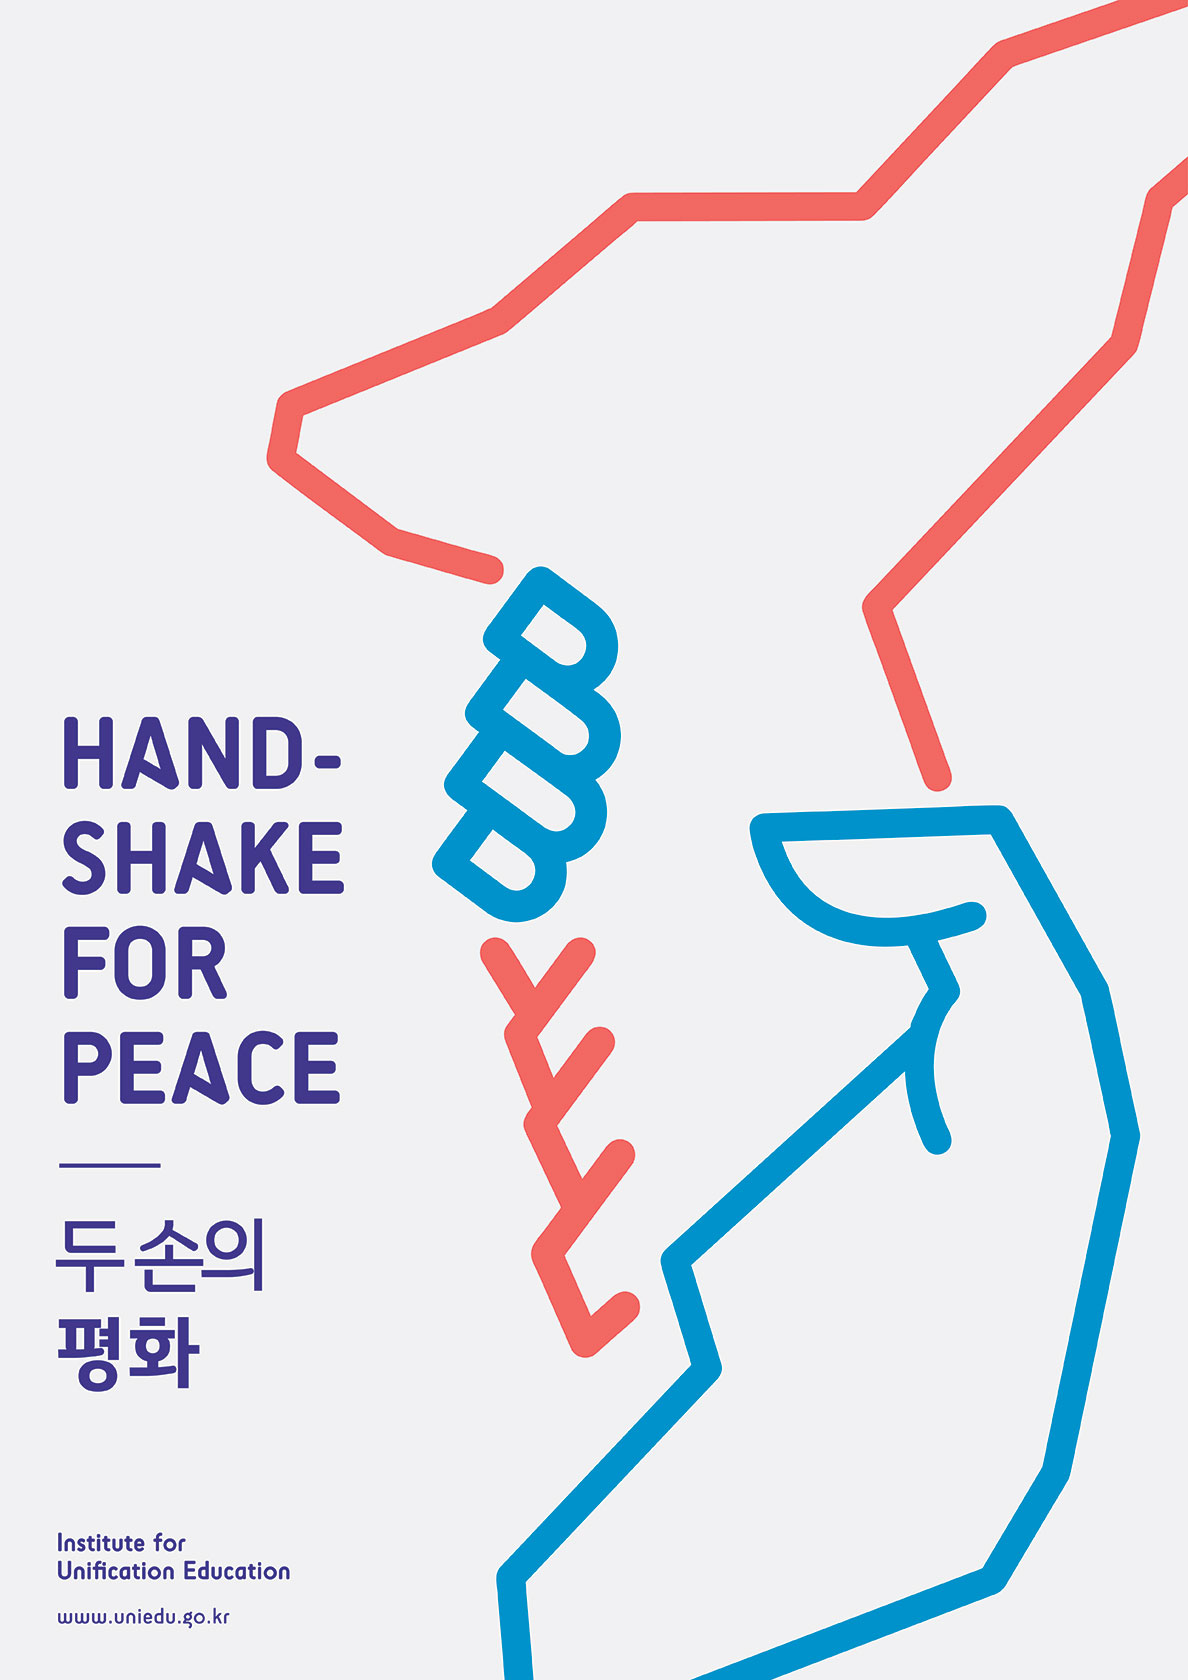 Handshake for peace